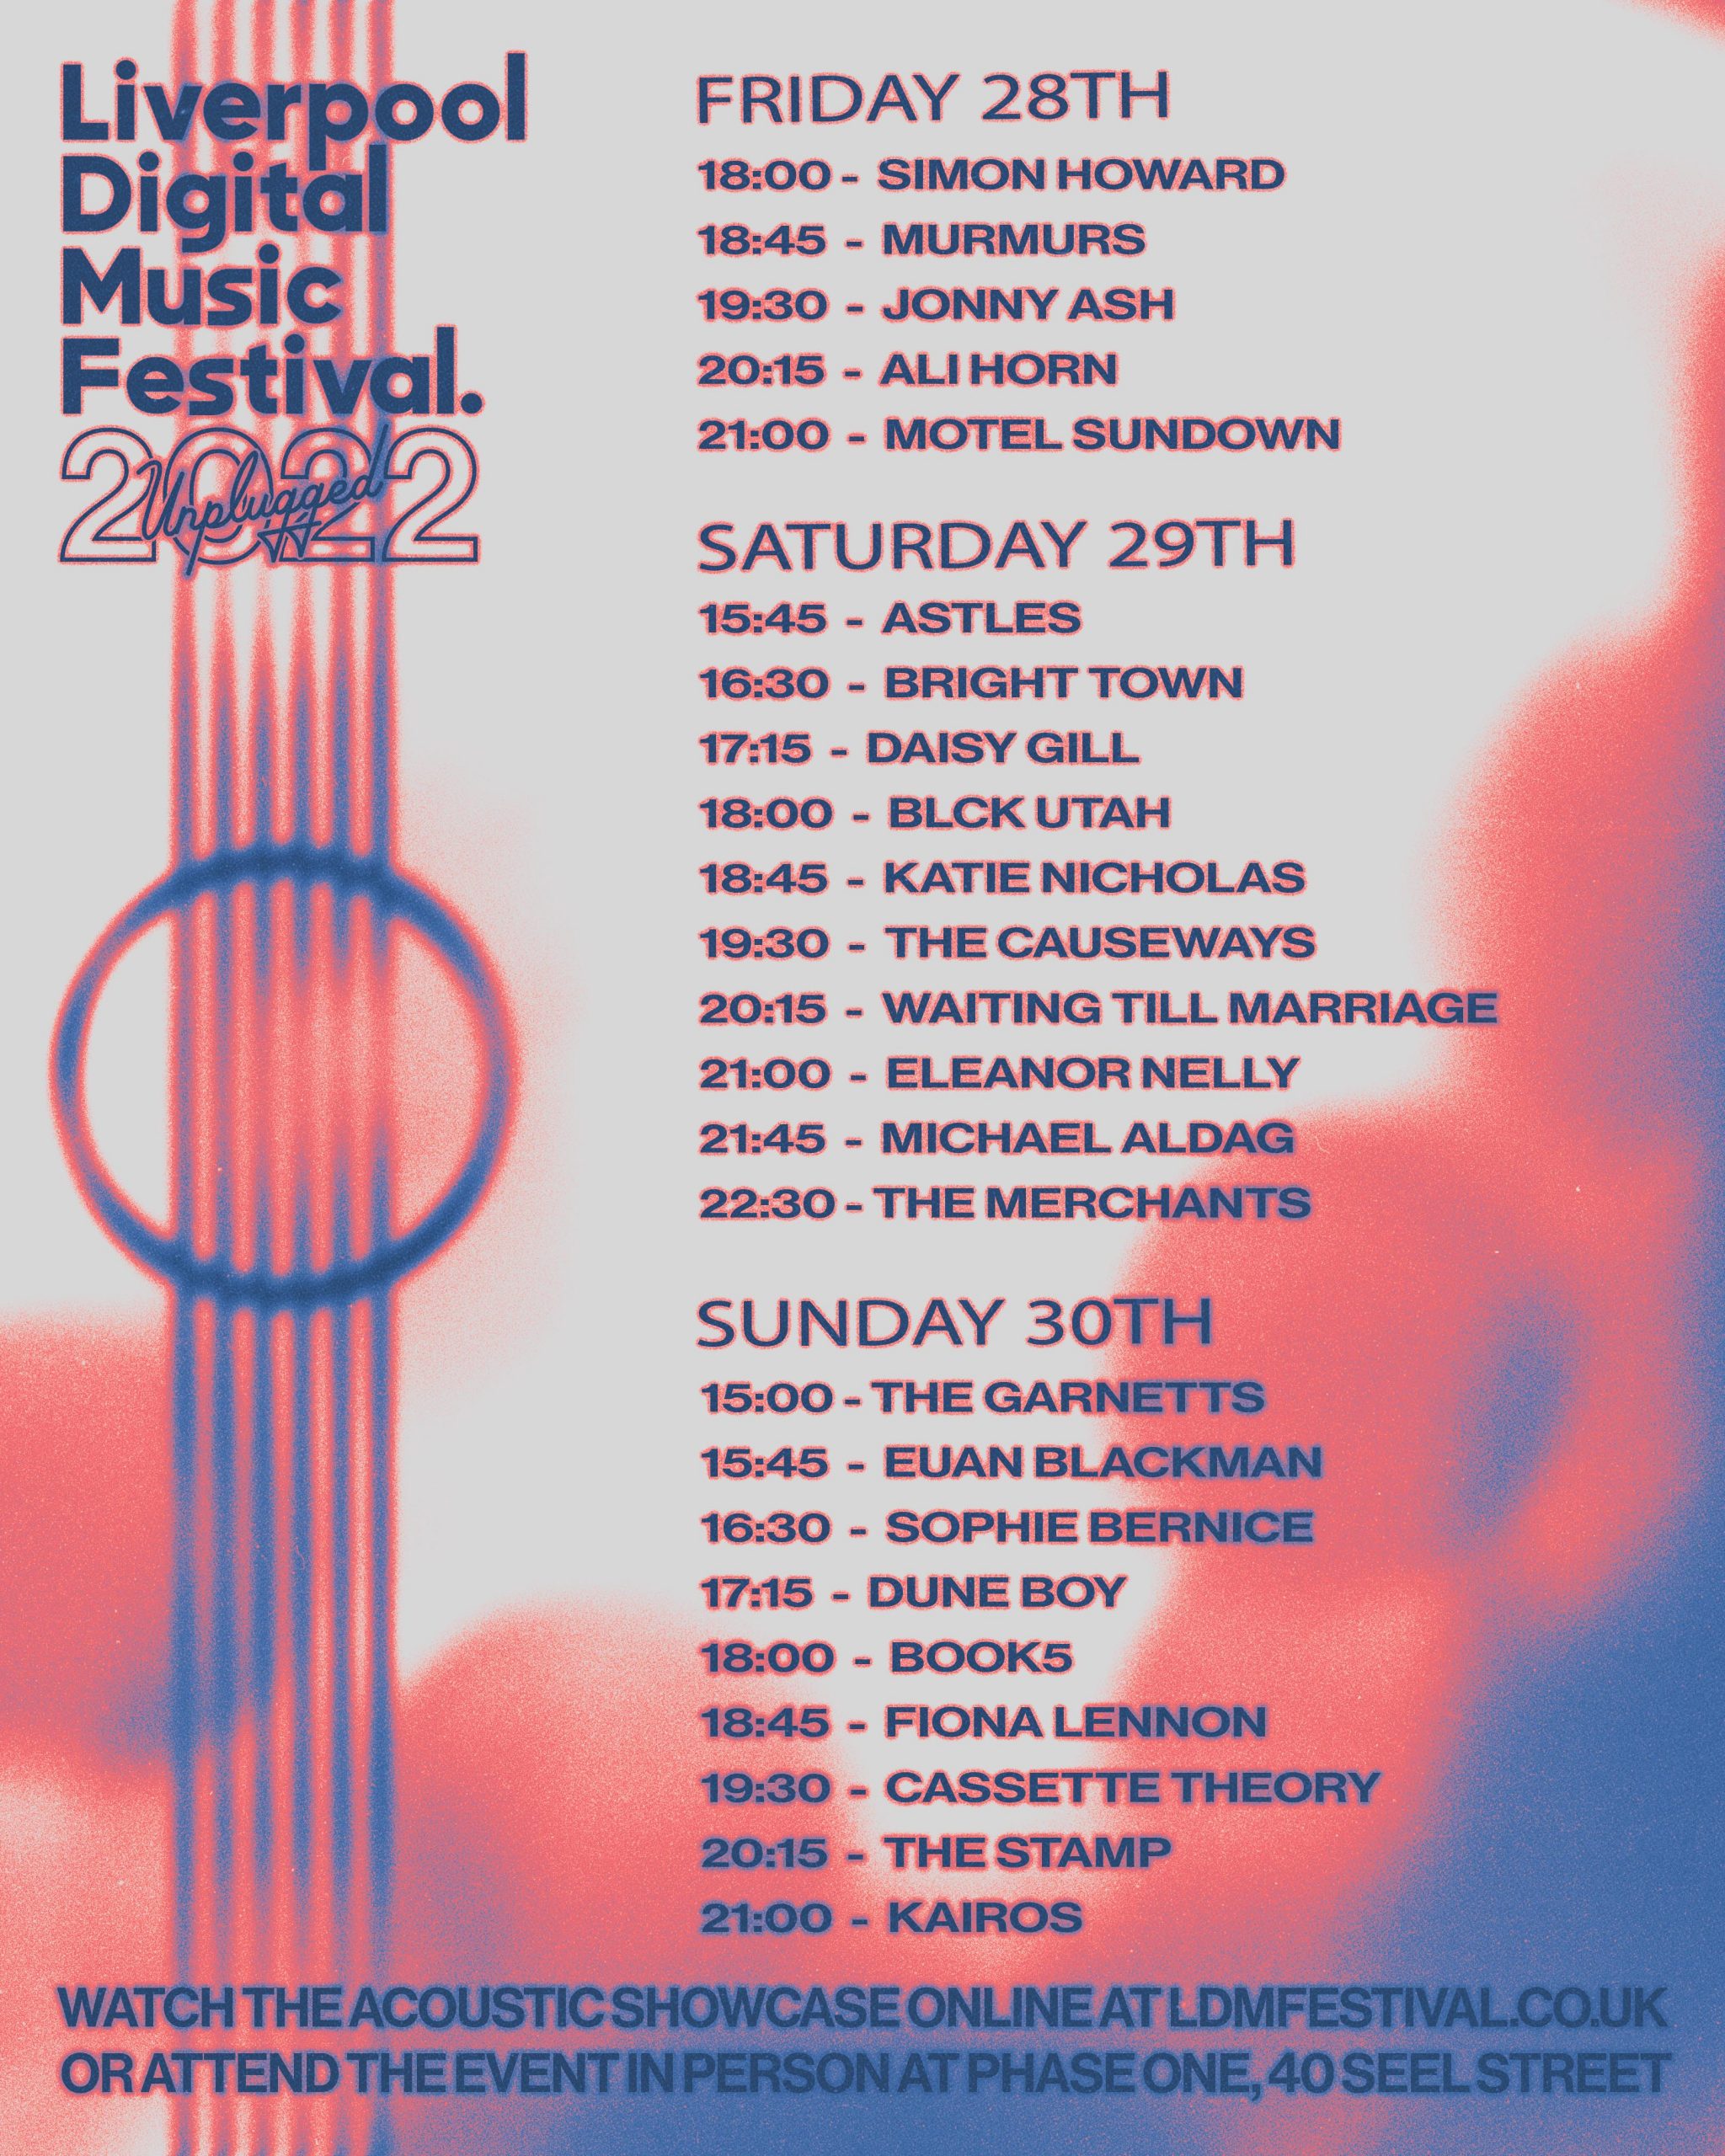 Liverpool Digital Music Festival